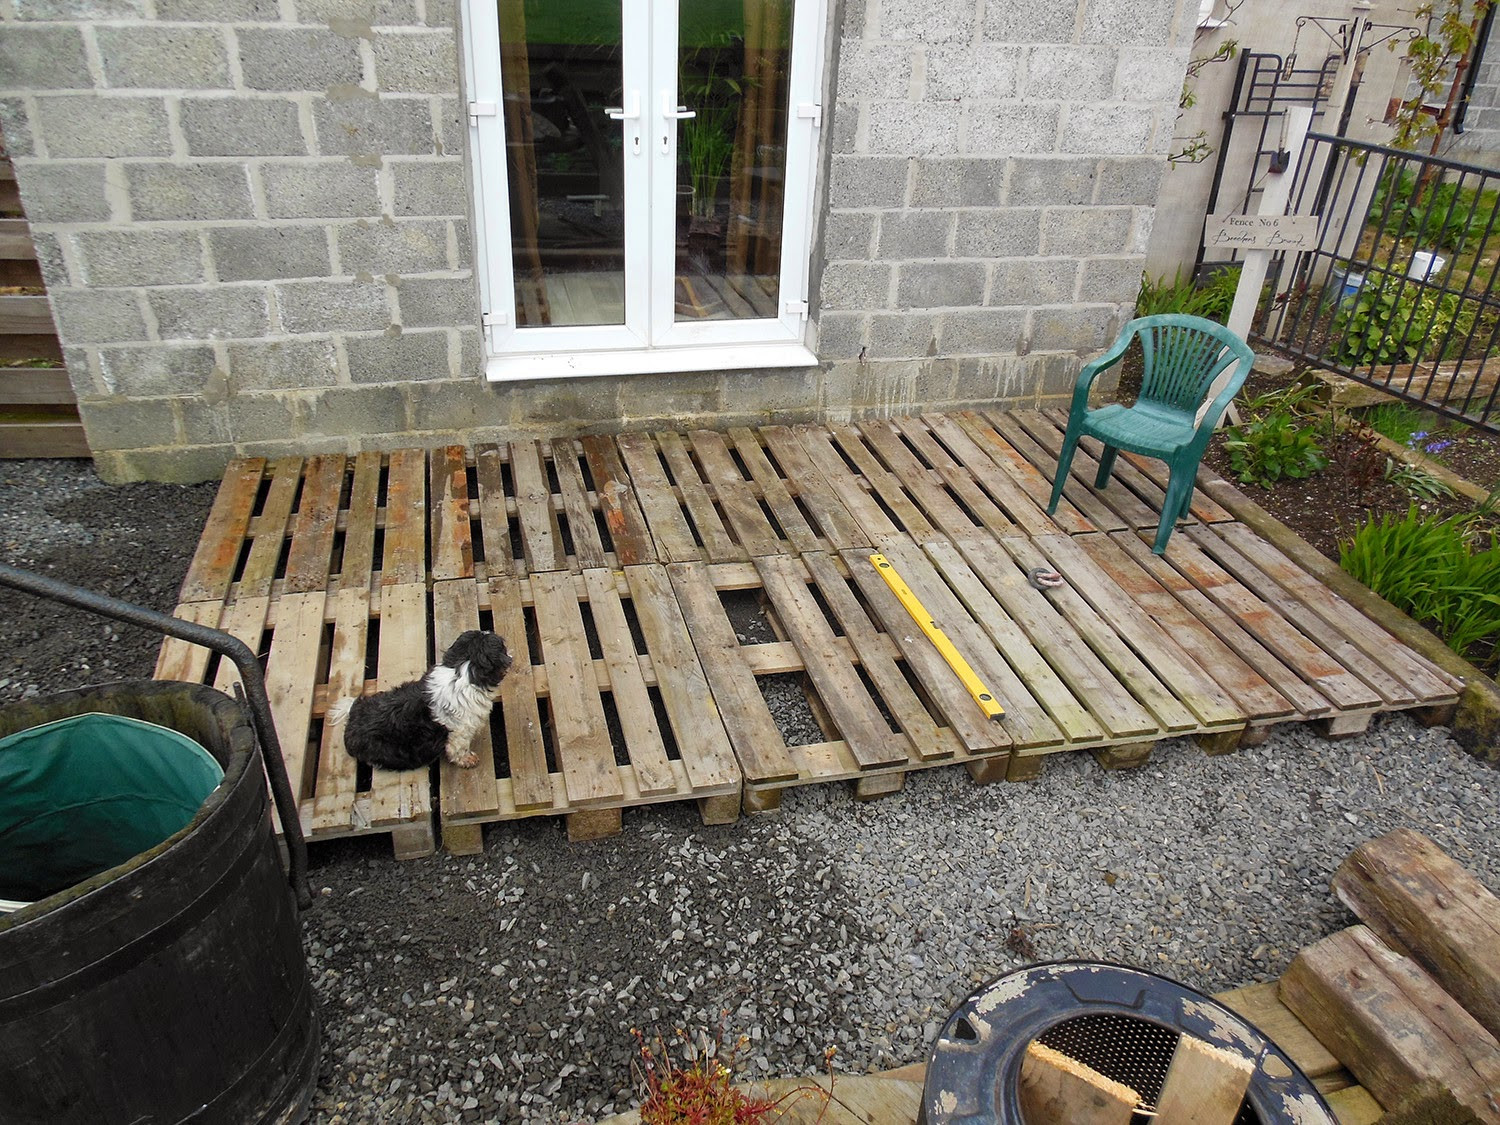 Best ideas about DIY Wood Deck
. Save or Pin The Tenacious Gardener DIY pallet wood decking Now.